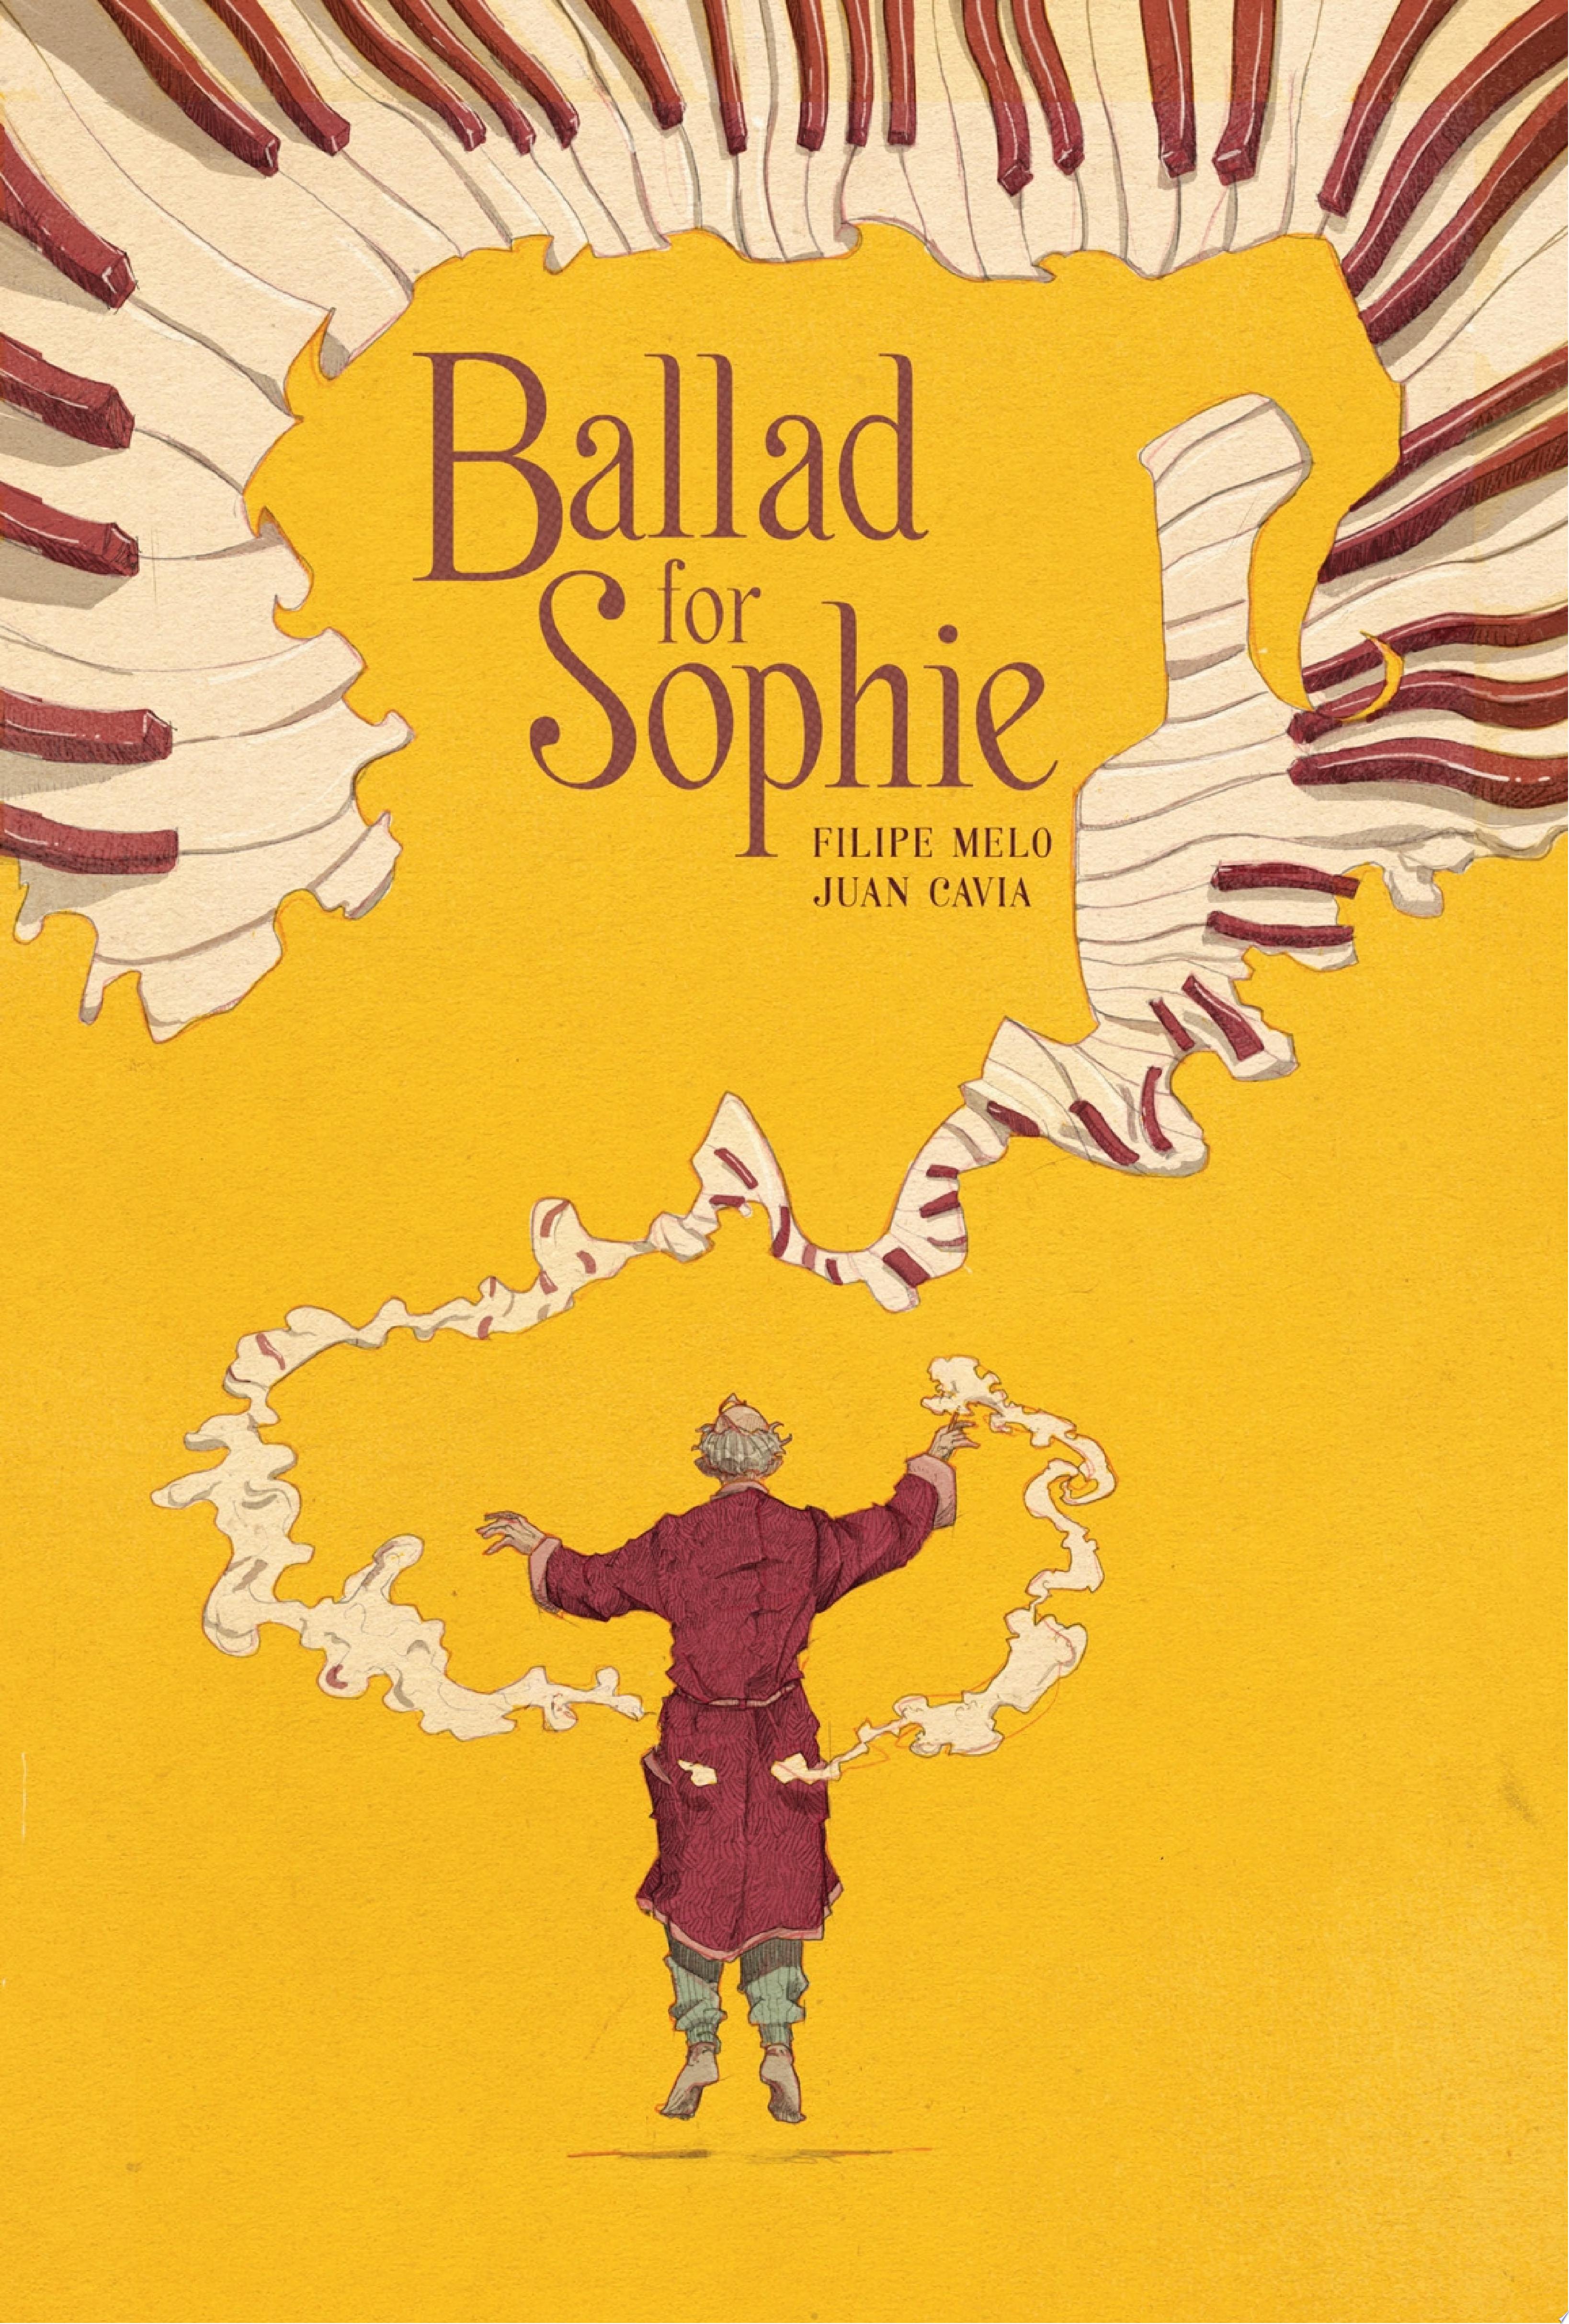 Image for "Ballad for Sophie"